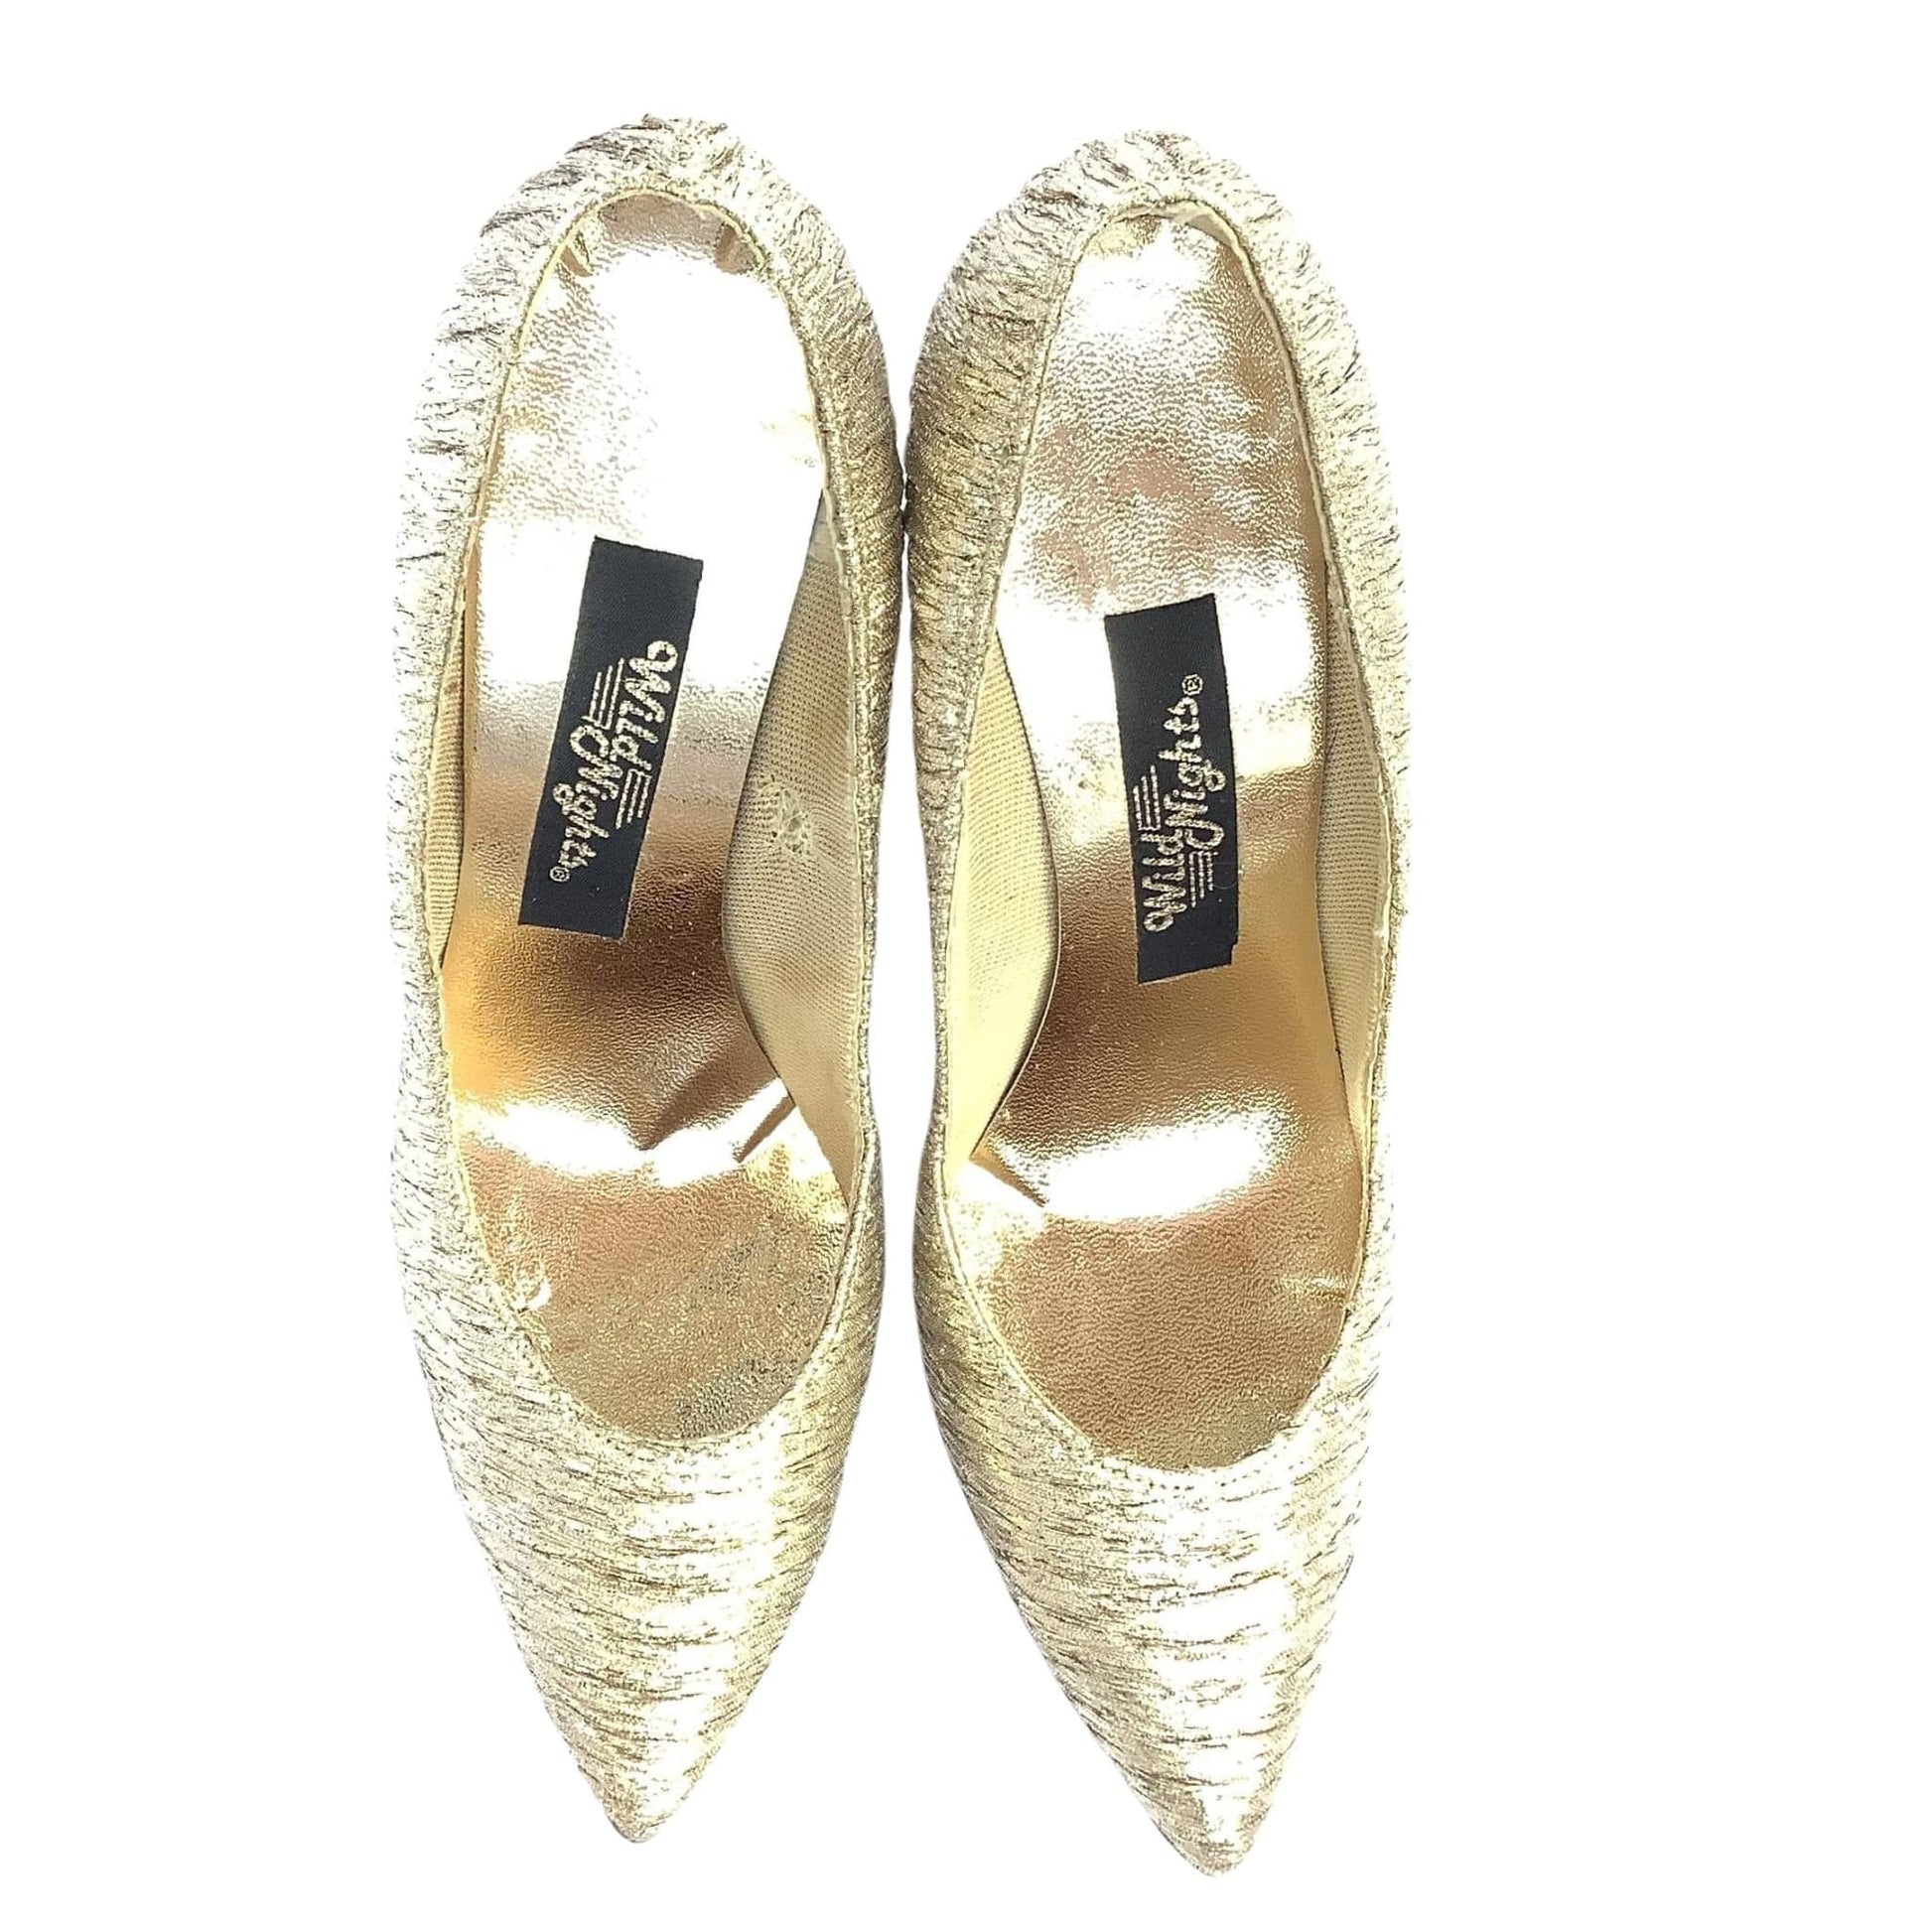 Gold Lurex Pump Shoes 7.5 / Gold